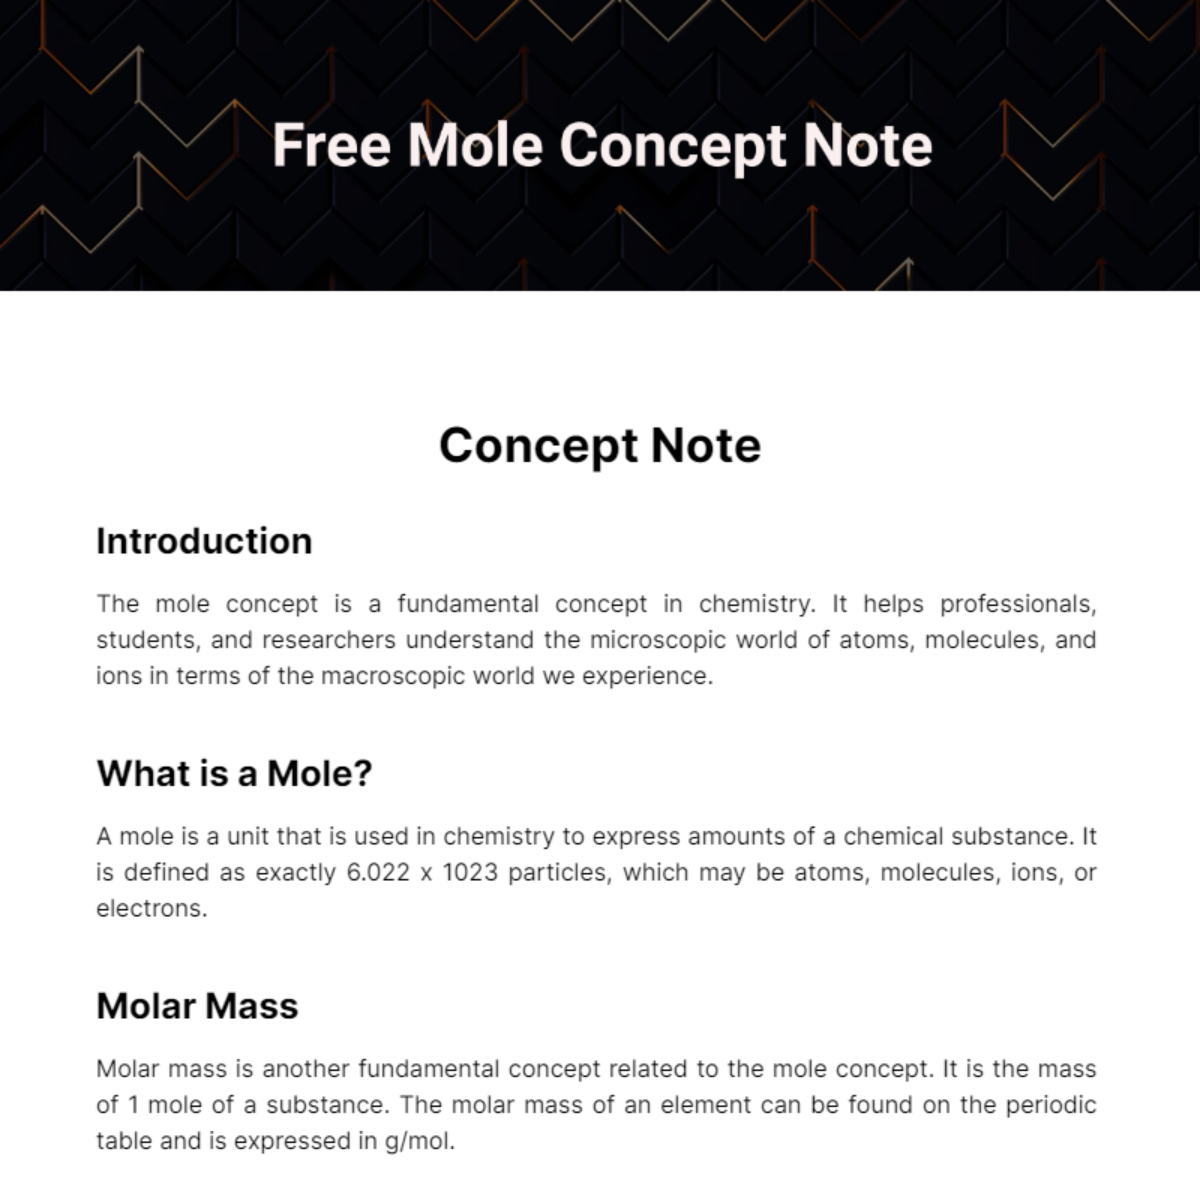 Free Mole Concept Note Template